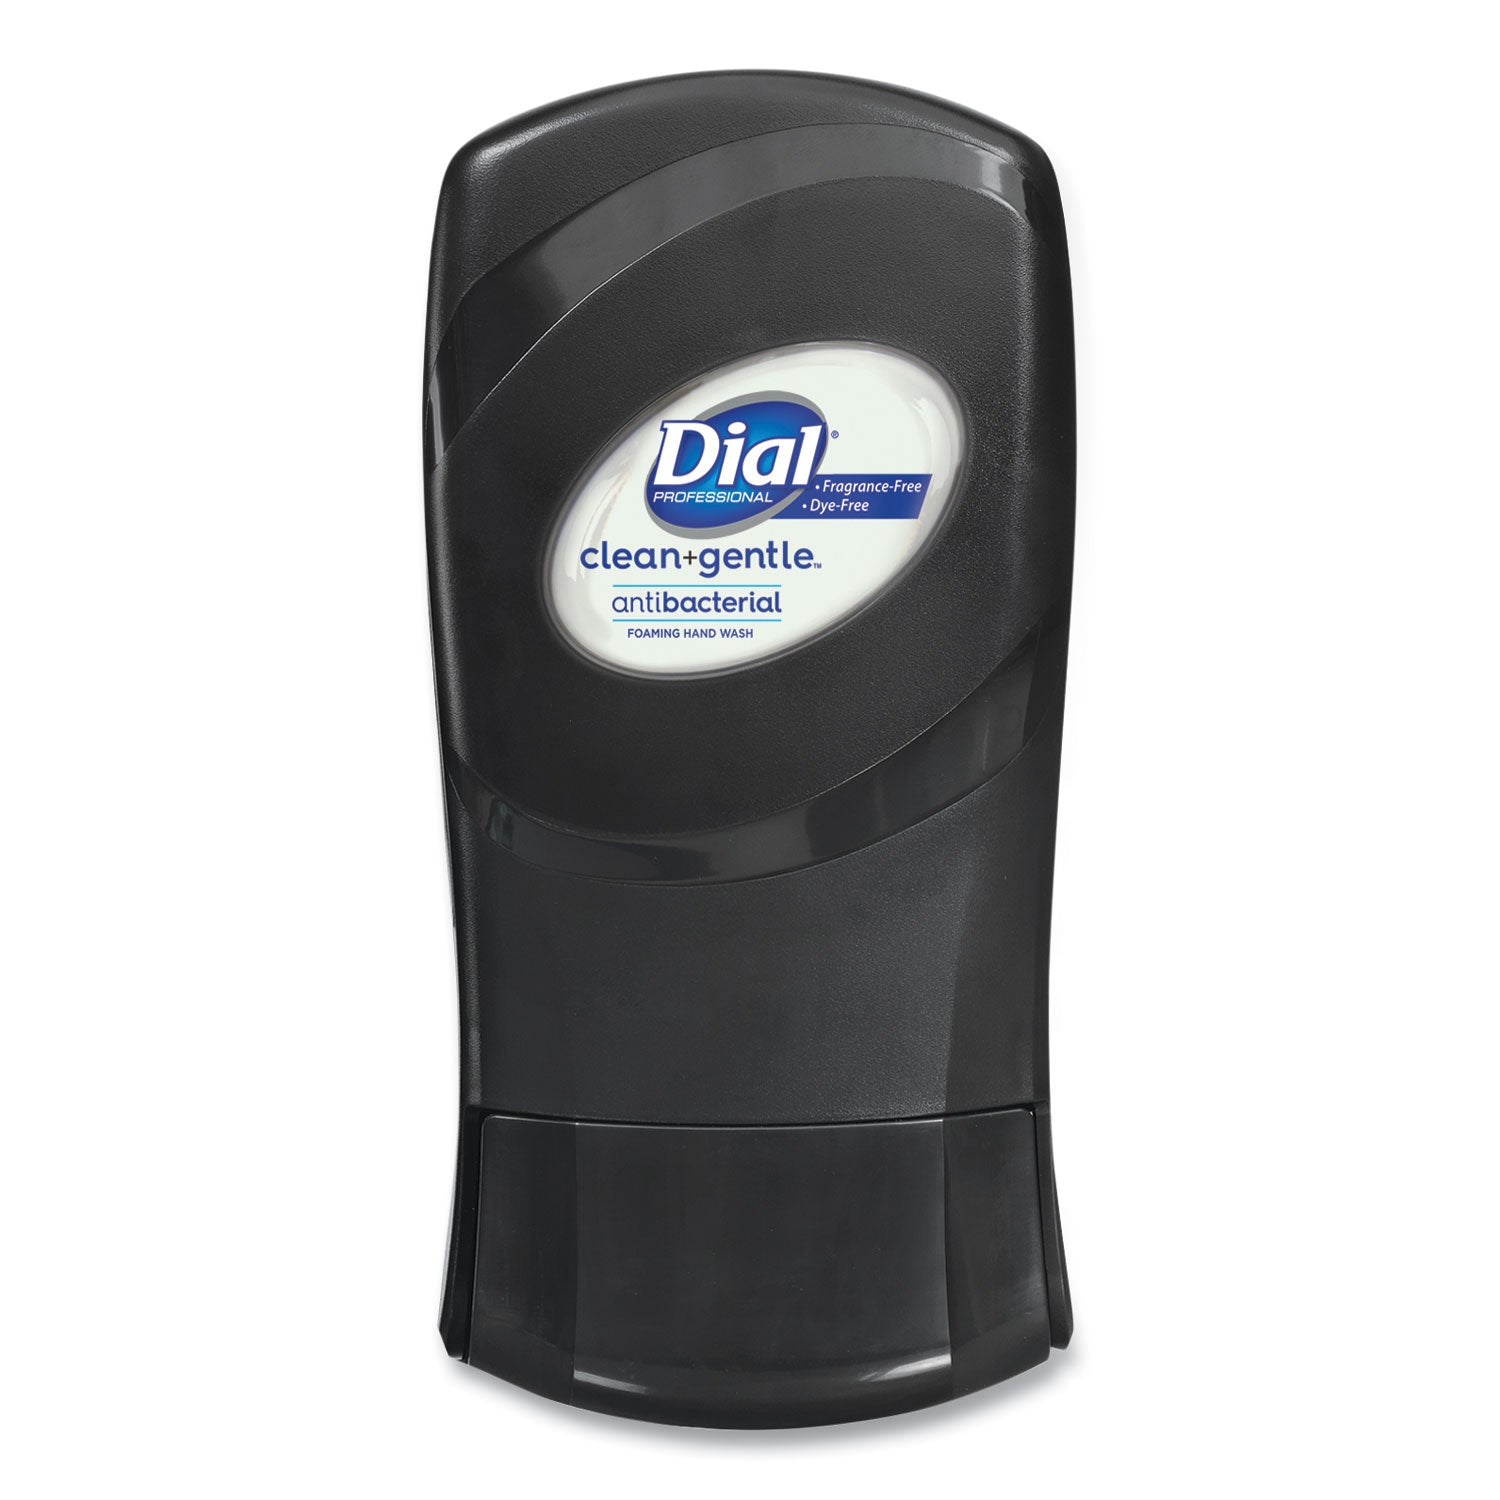 clean+gentle-antibacterial-foaming-hand-wash-refill-for-fit-manual-dispenser-fragrance-free-12-l-3-carton_dia32100ct - 2